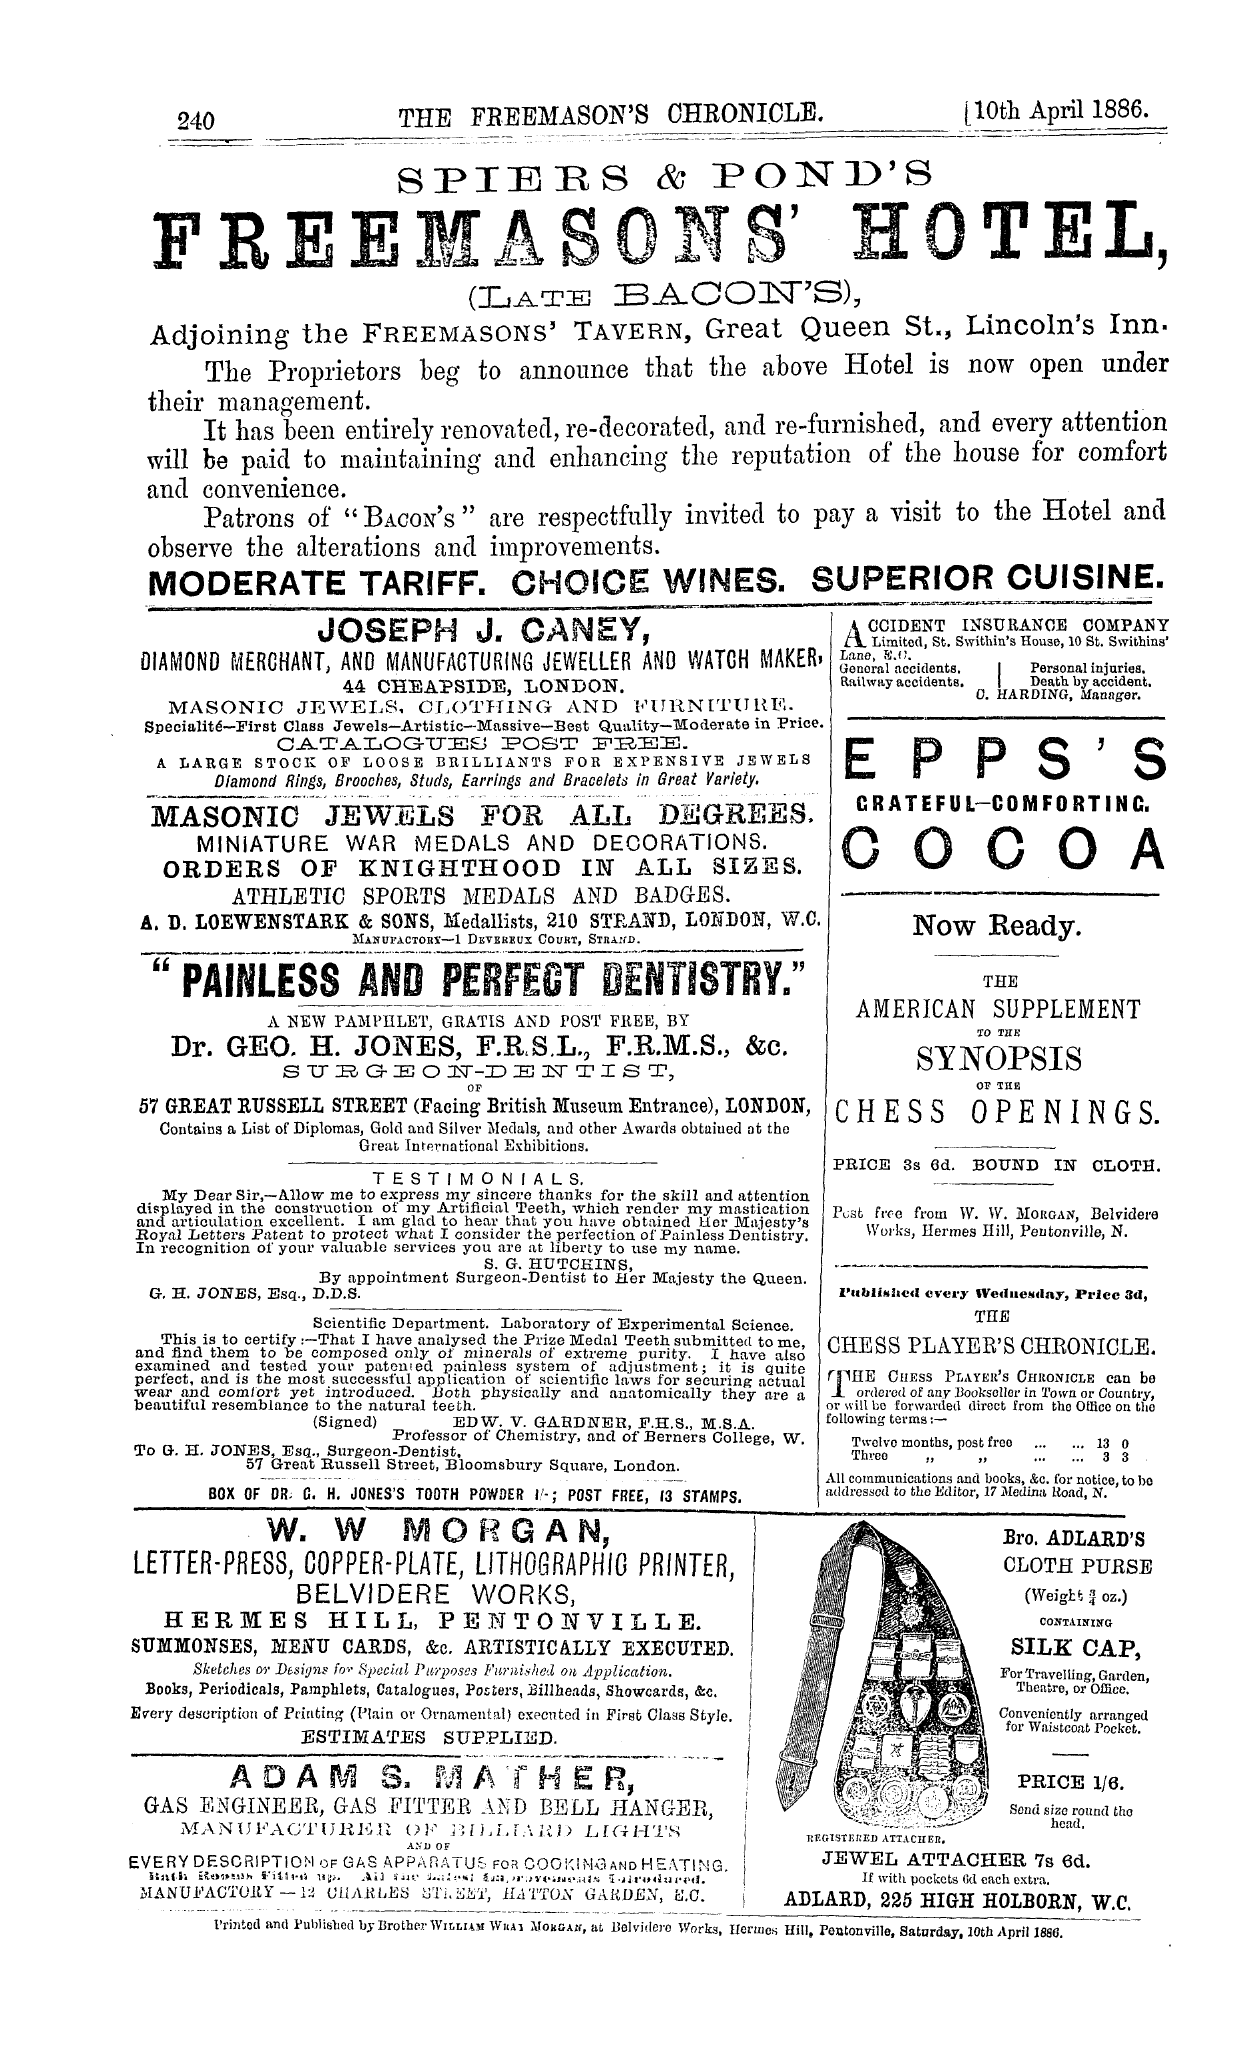 The Freemason's Chronicle: 1886-04-10: 16